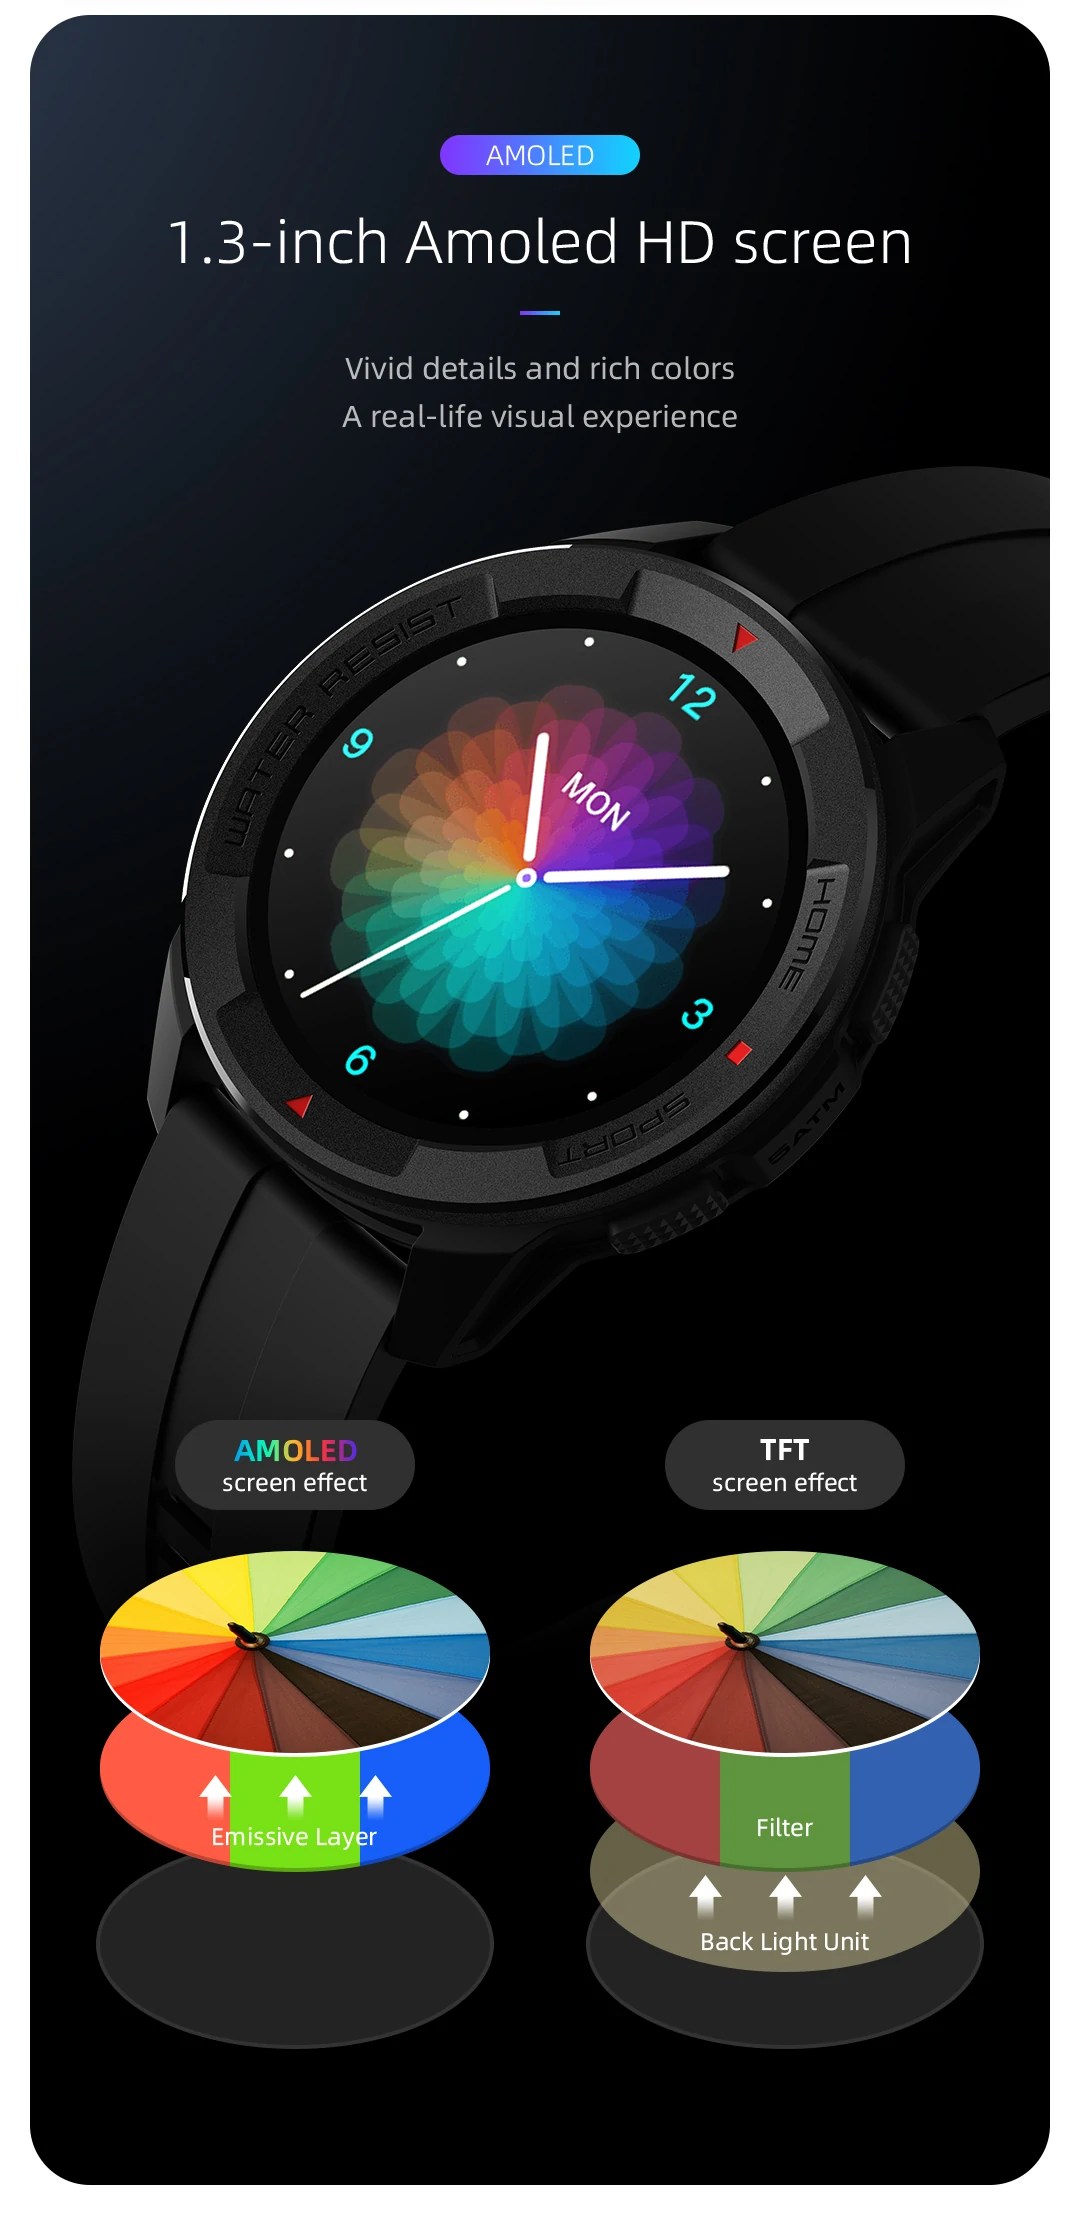 Original Mibro X1 Smart Watch 5ATM Waterproof Smartwatch Men Women Android IOS Fitness Sport Watch